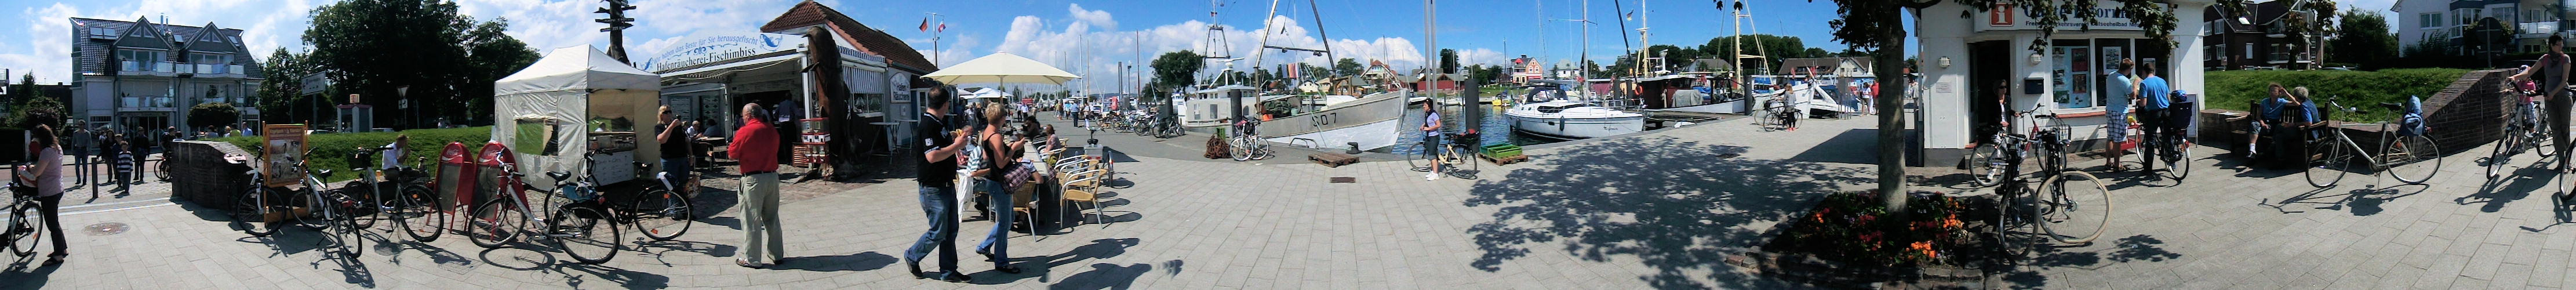 Luebecker Bucht - 2011